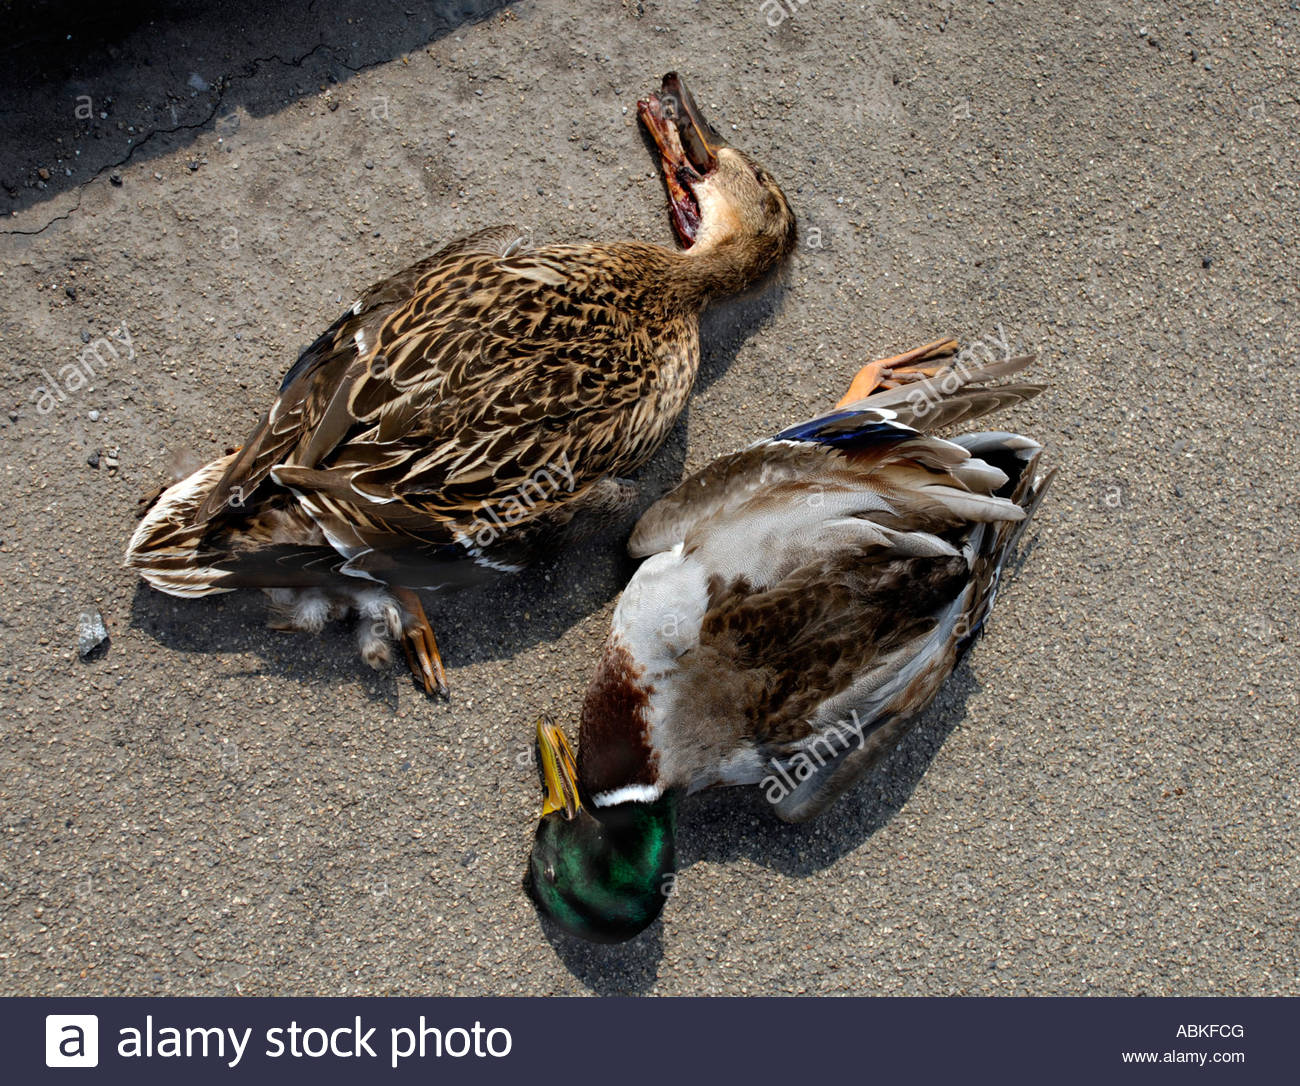 roadkill-dead-ducks-duck-and-drake-hit-by-a-truck-simultaneously-ABKFCG.jpg